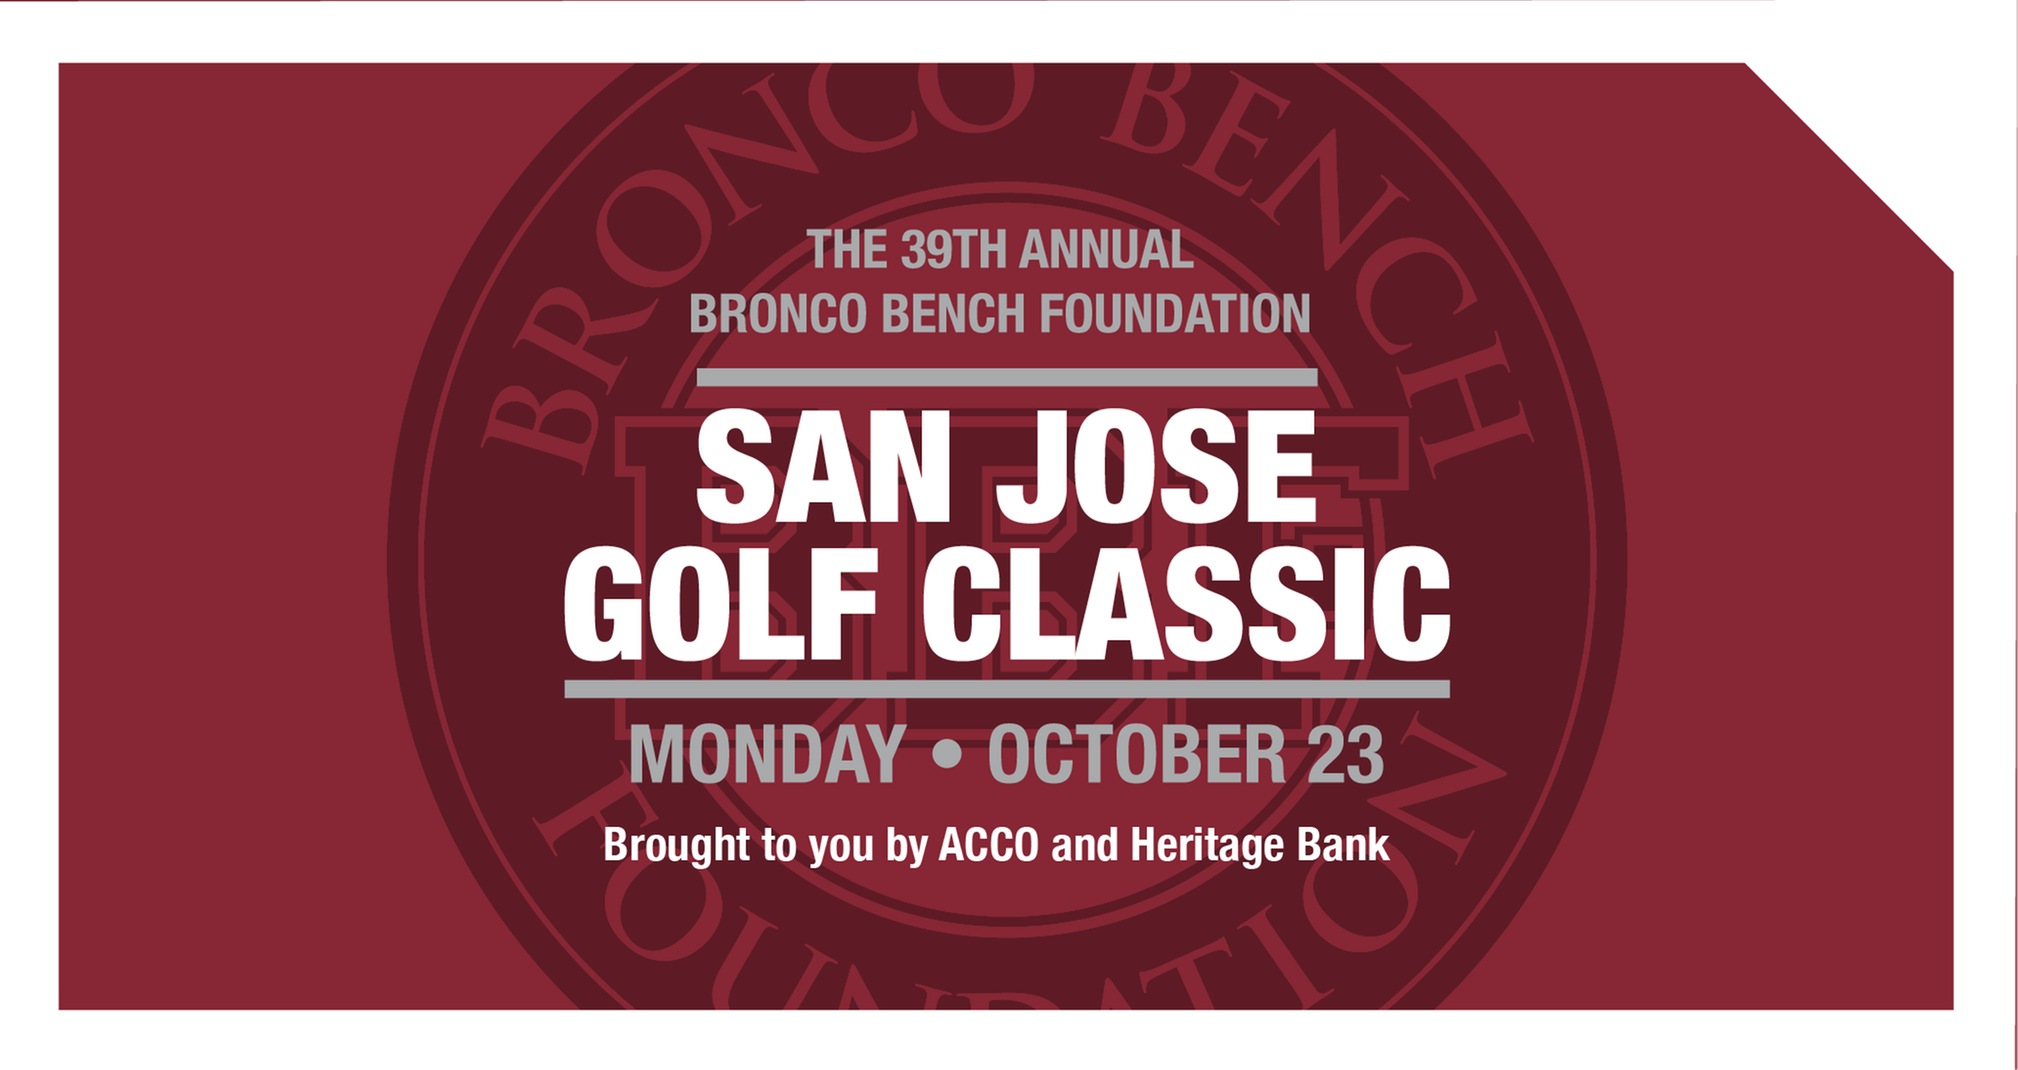 Santa Clara Athletics to Hold Local Golf Tournament Fundraiser